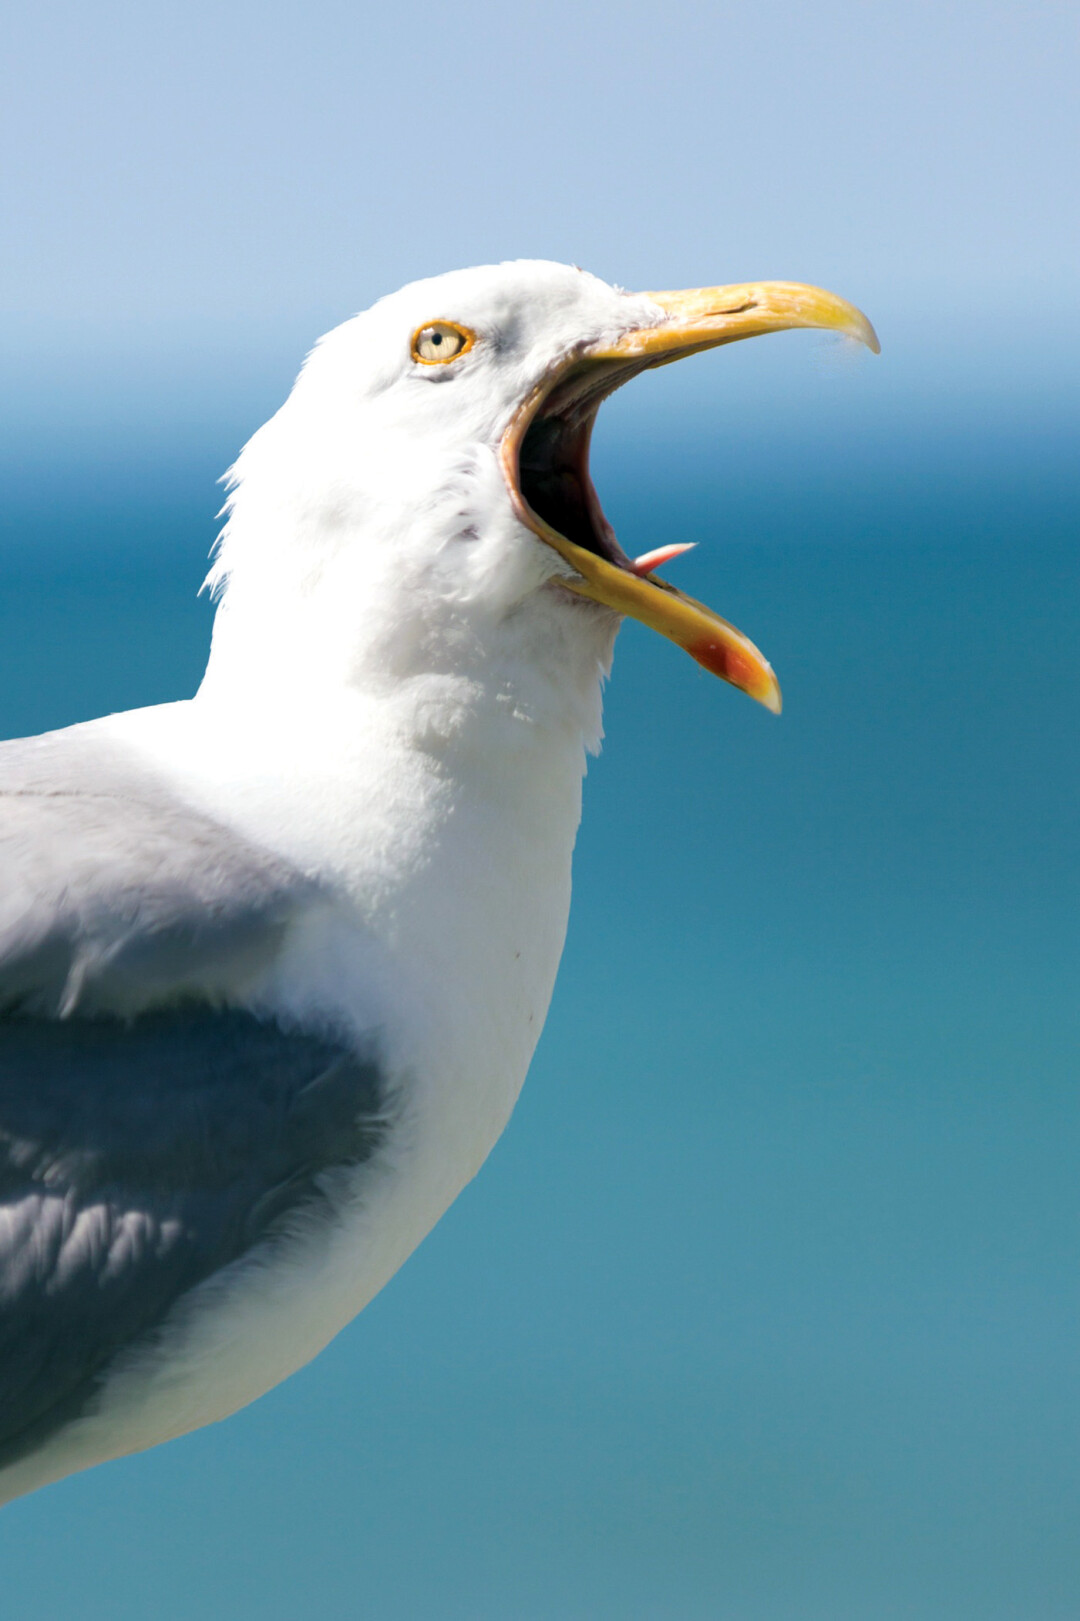 A seagull (shown here screeching).